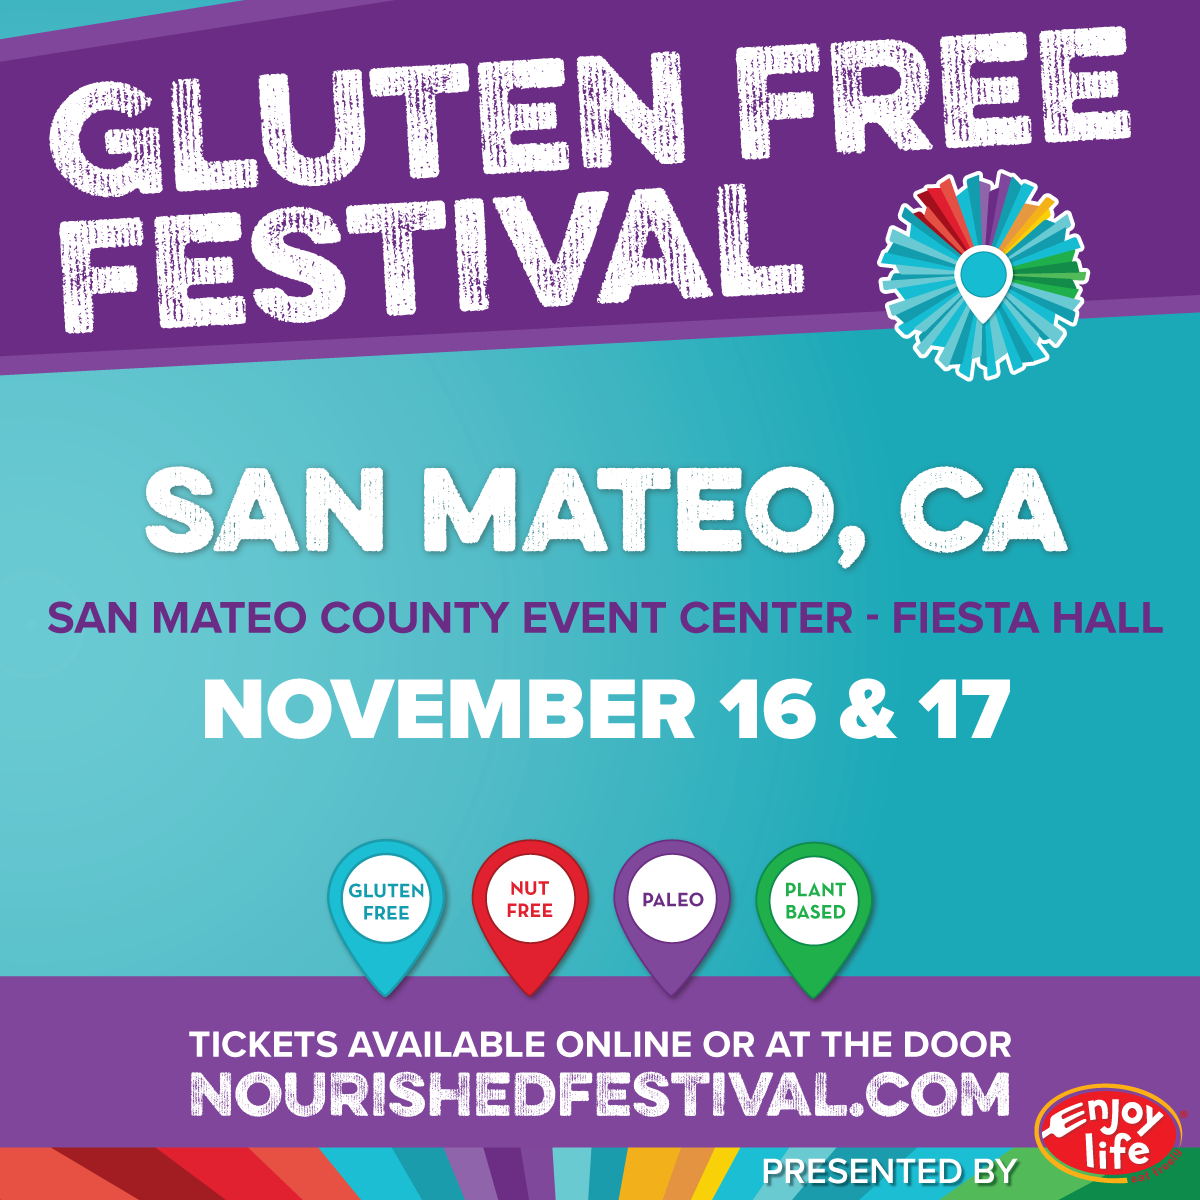 USA’s Largest GlutenFree Food Festival Returns to San Mateo, CA